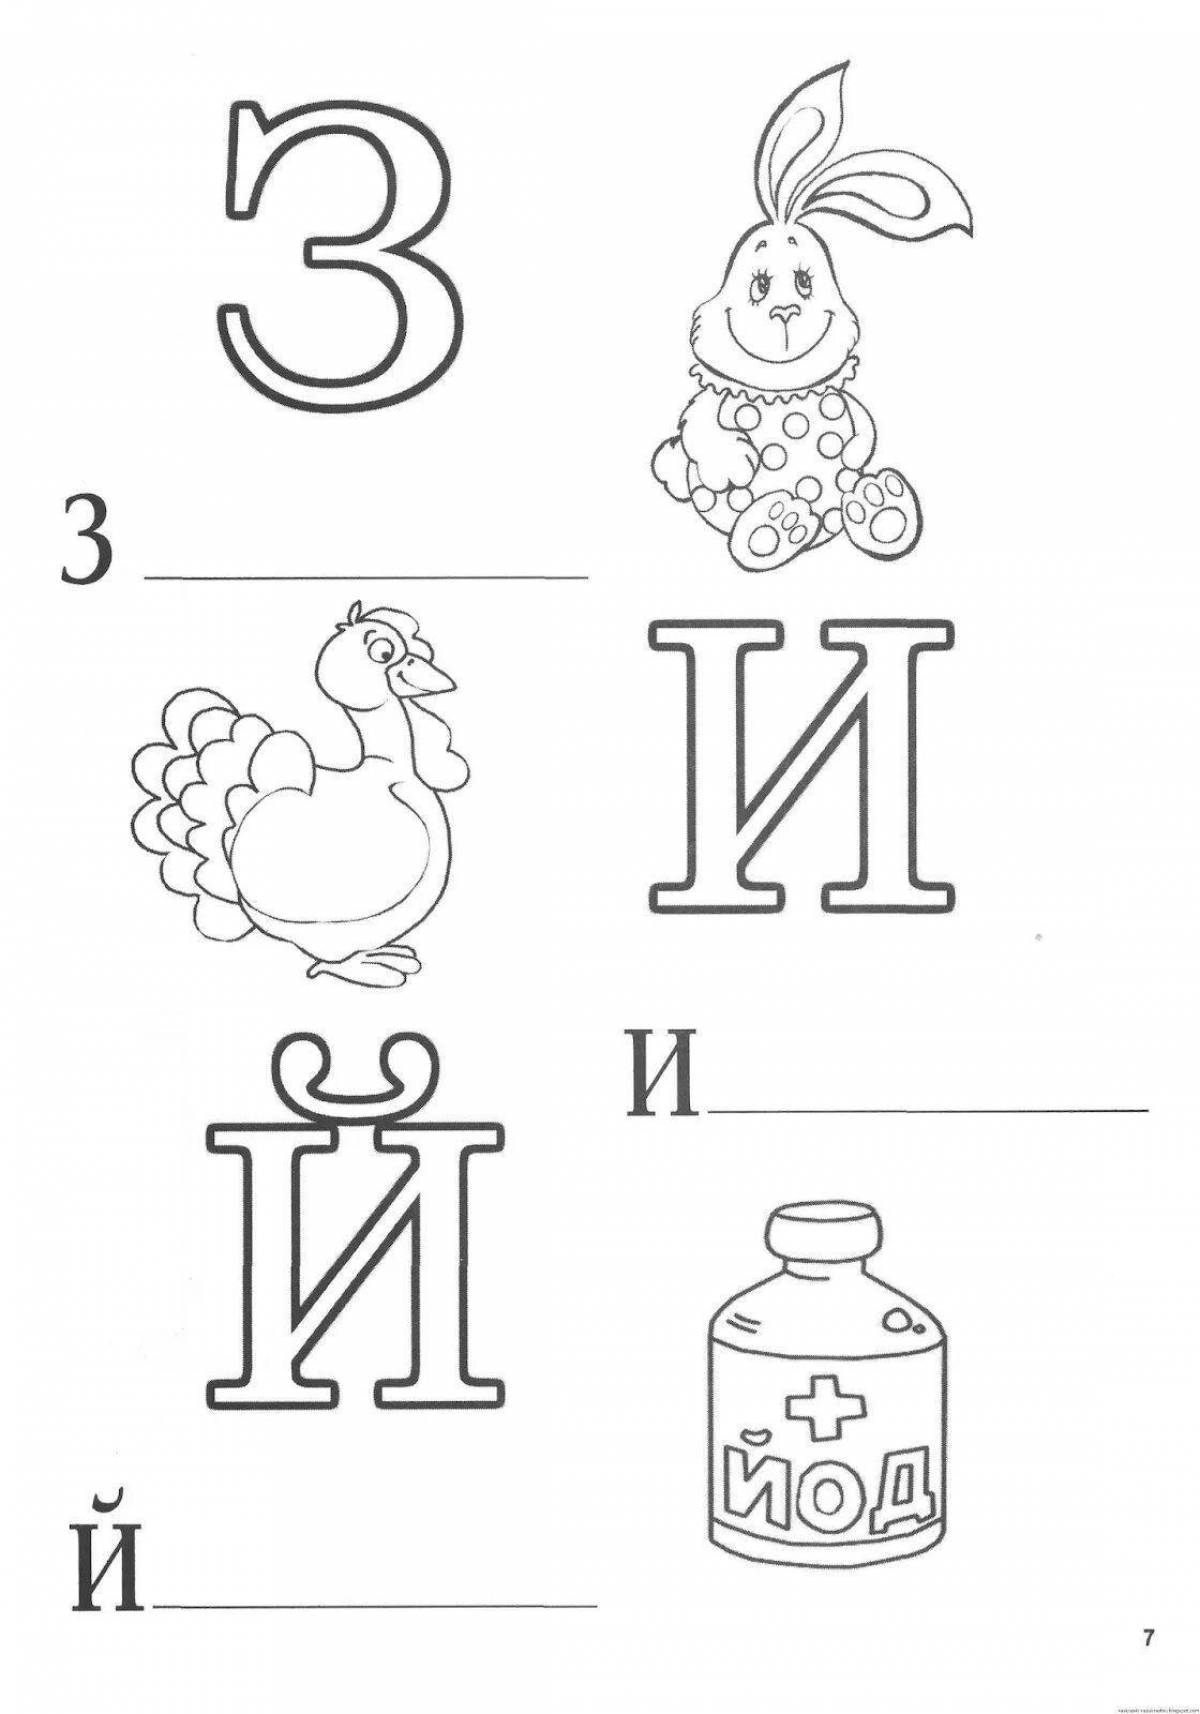 Alphabet for children 5 6 years old #9